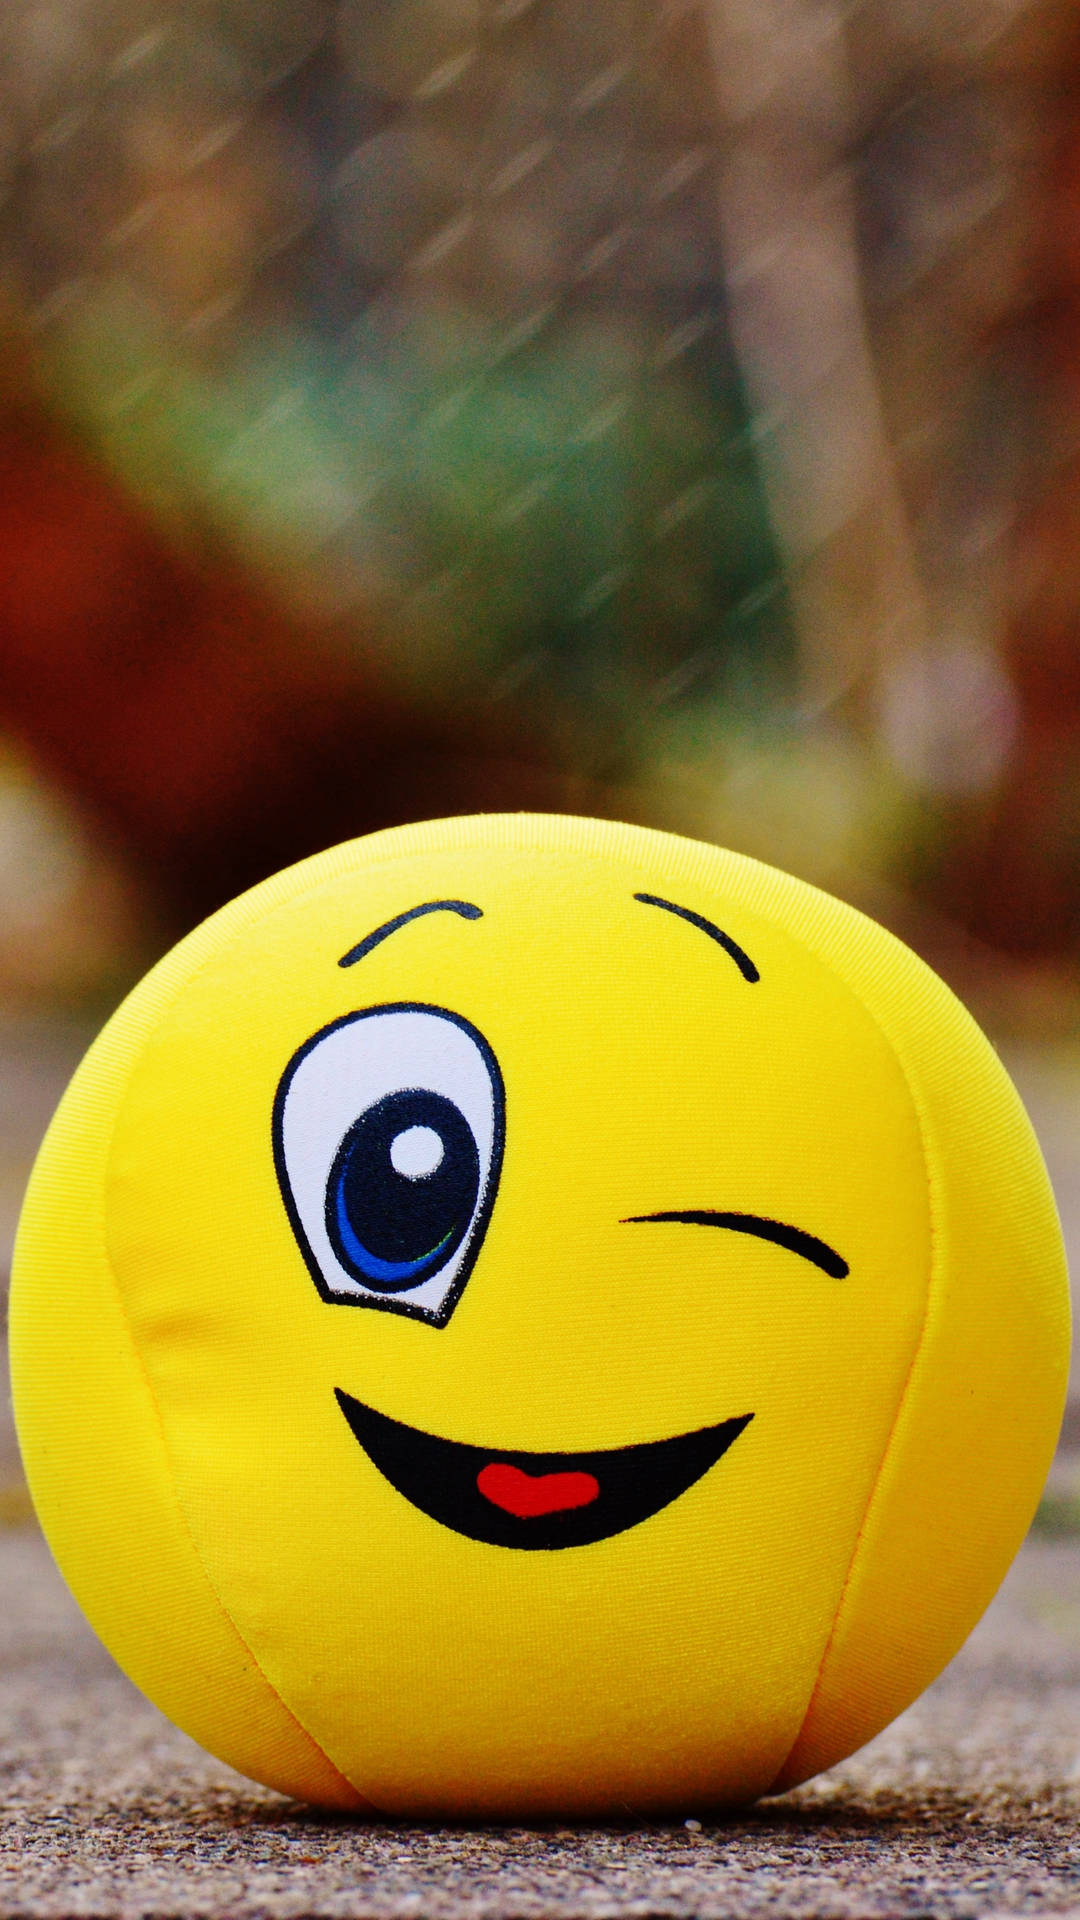 Winking Smiley Face Ball Cushion